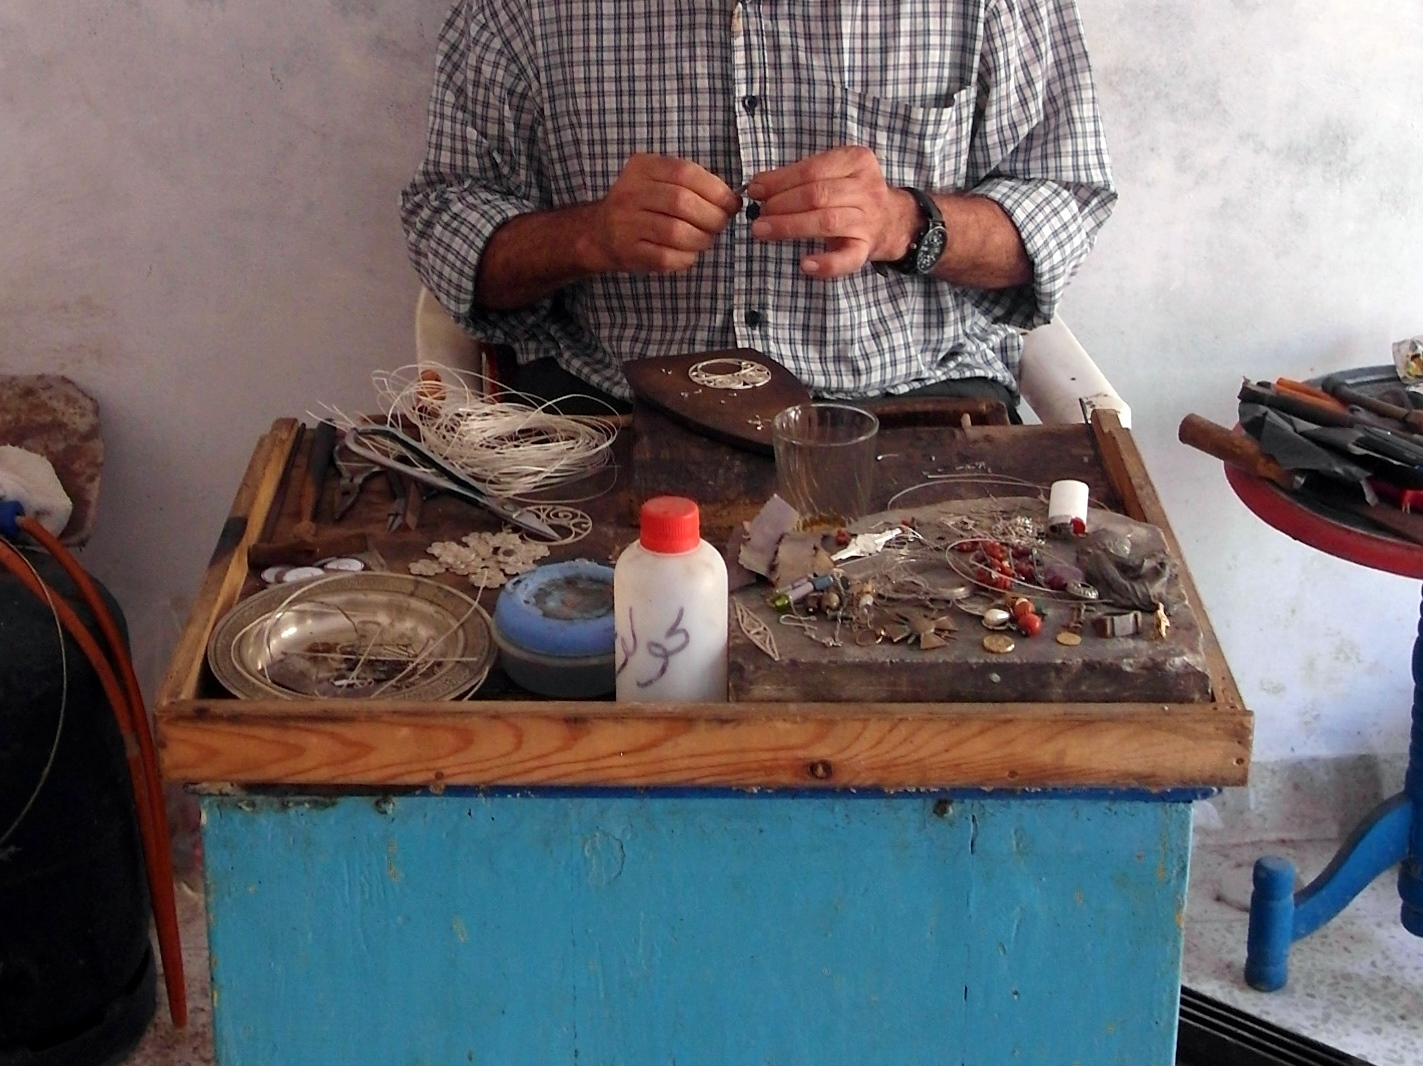 Copy of A filligree silversmith in Essaouira.JPG